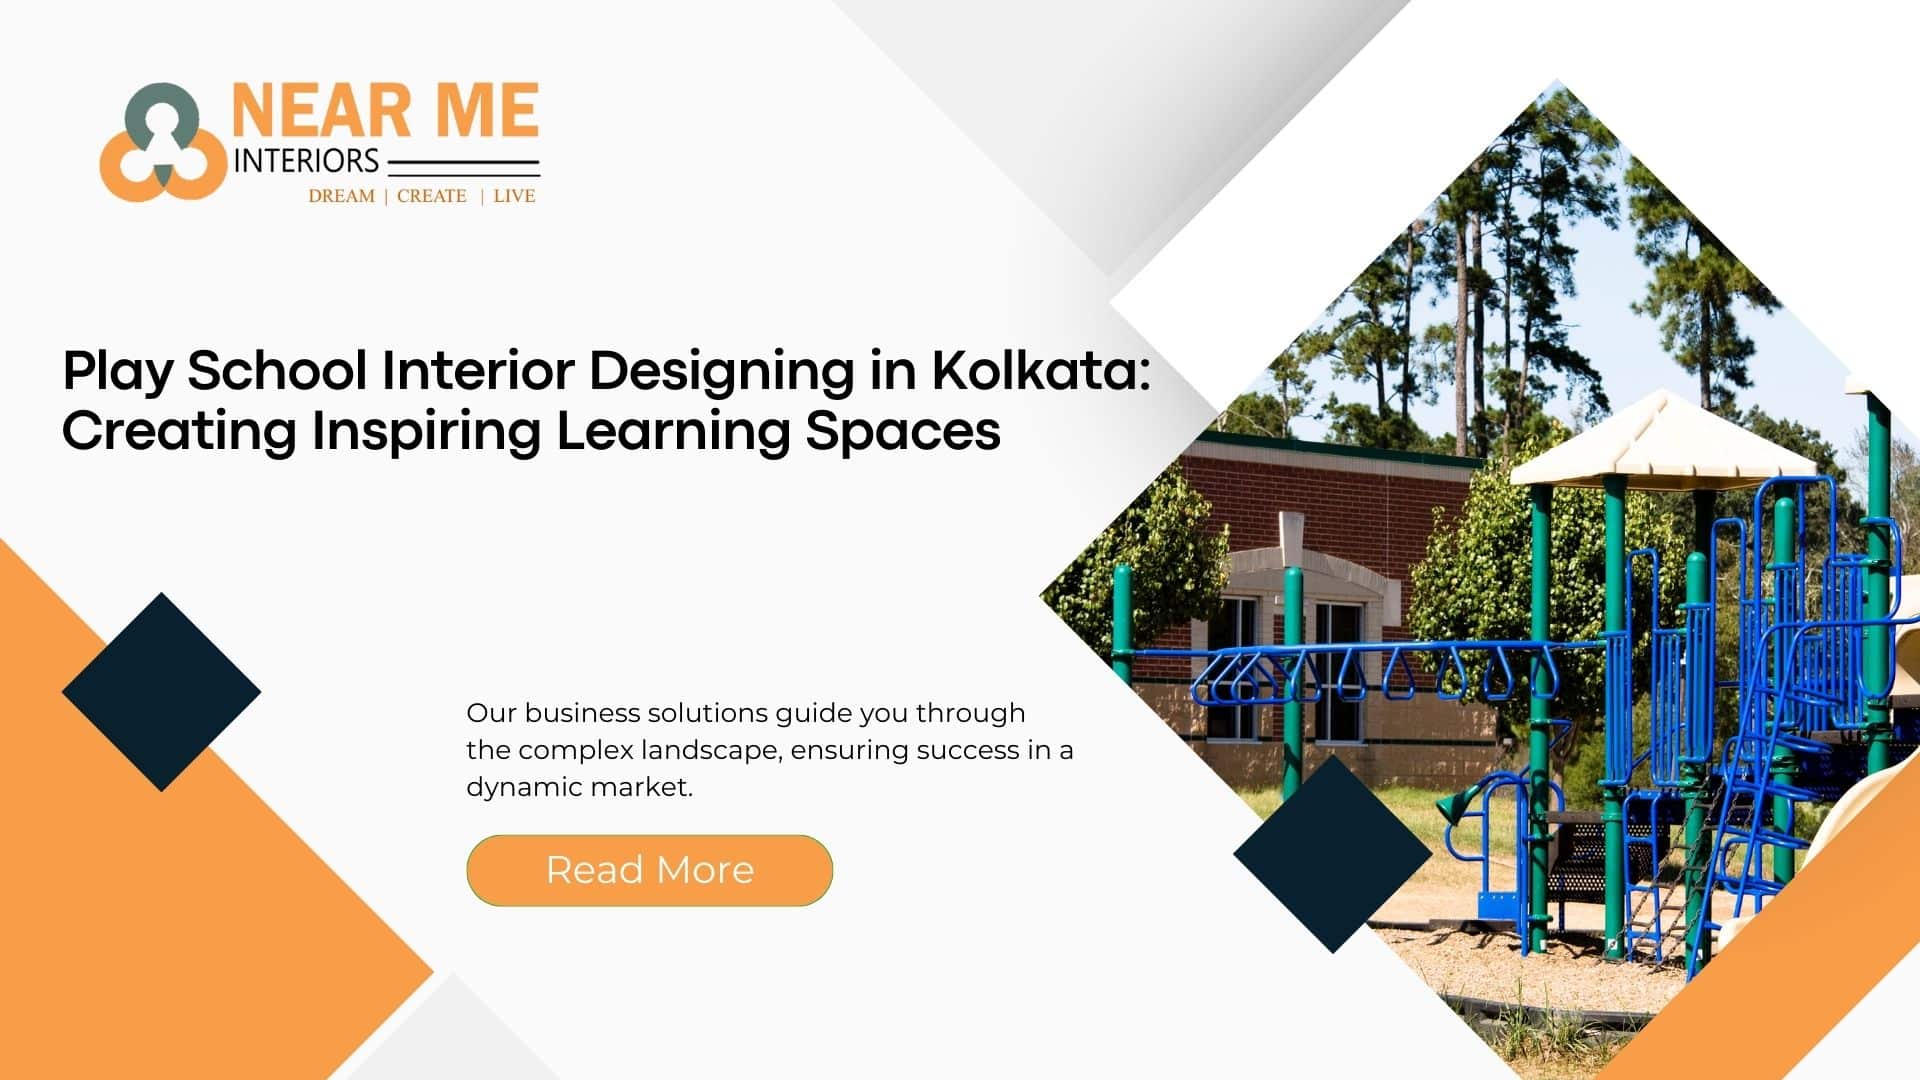 Play School Interior Designing in Kolkata: Creating Inspiring Learning Spaces